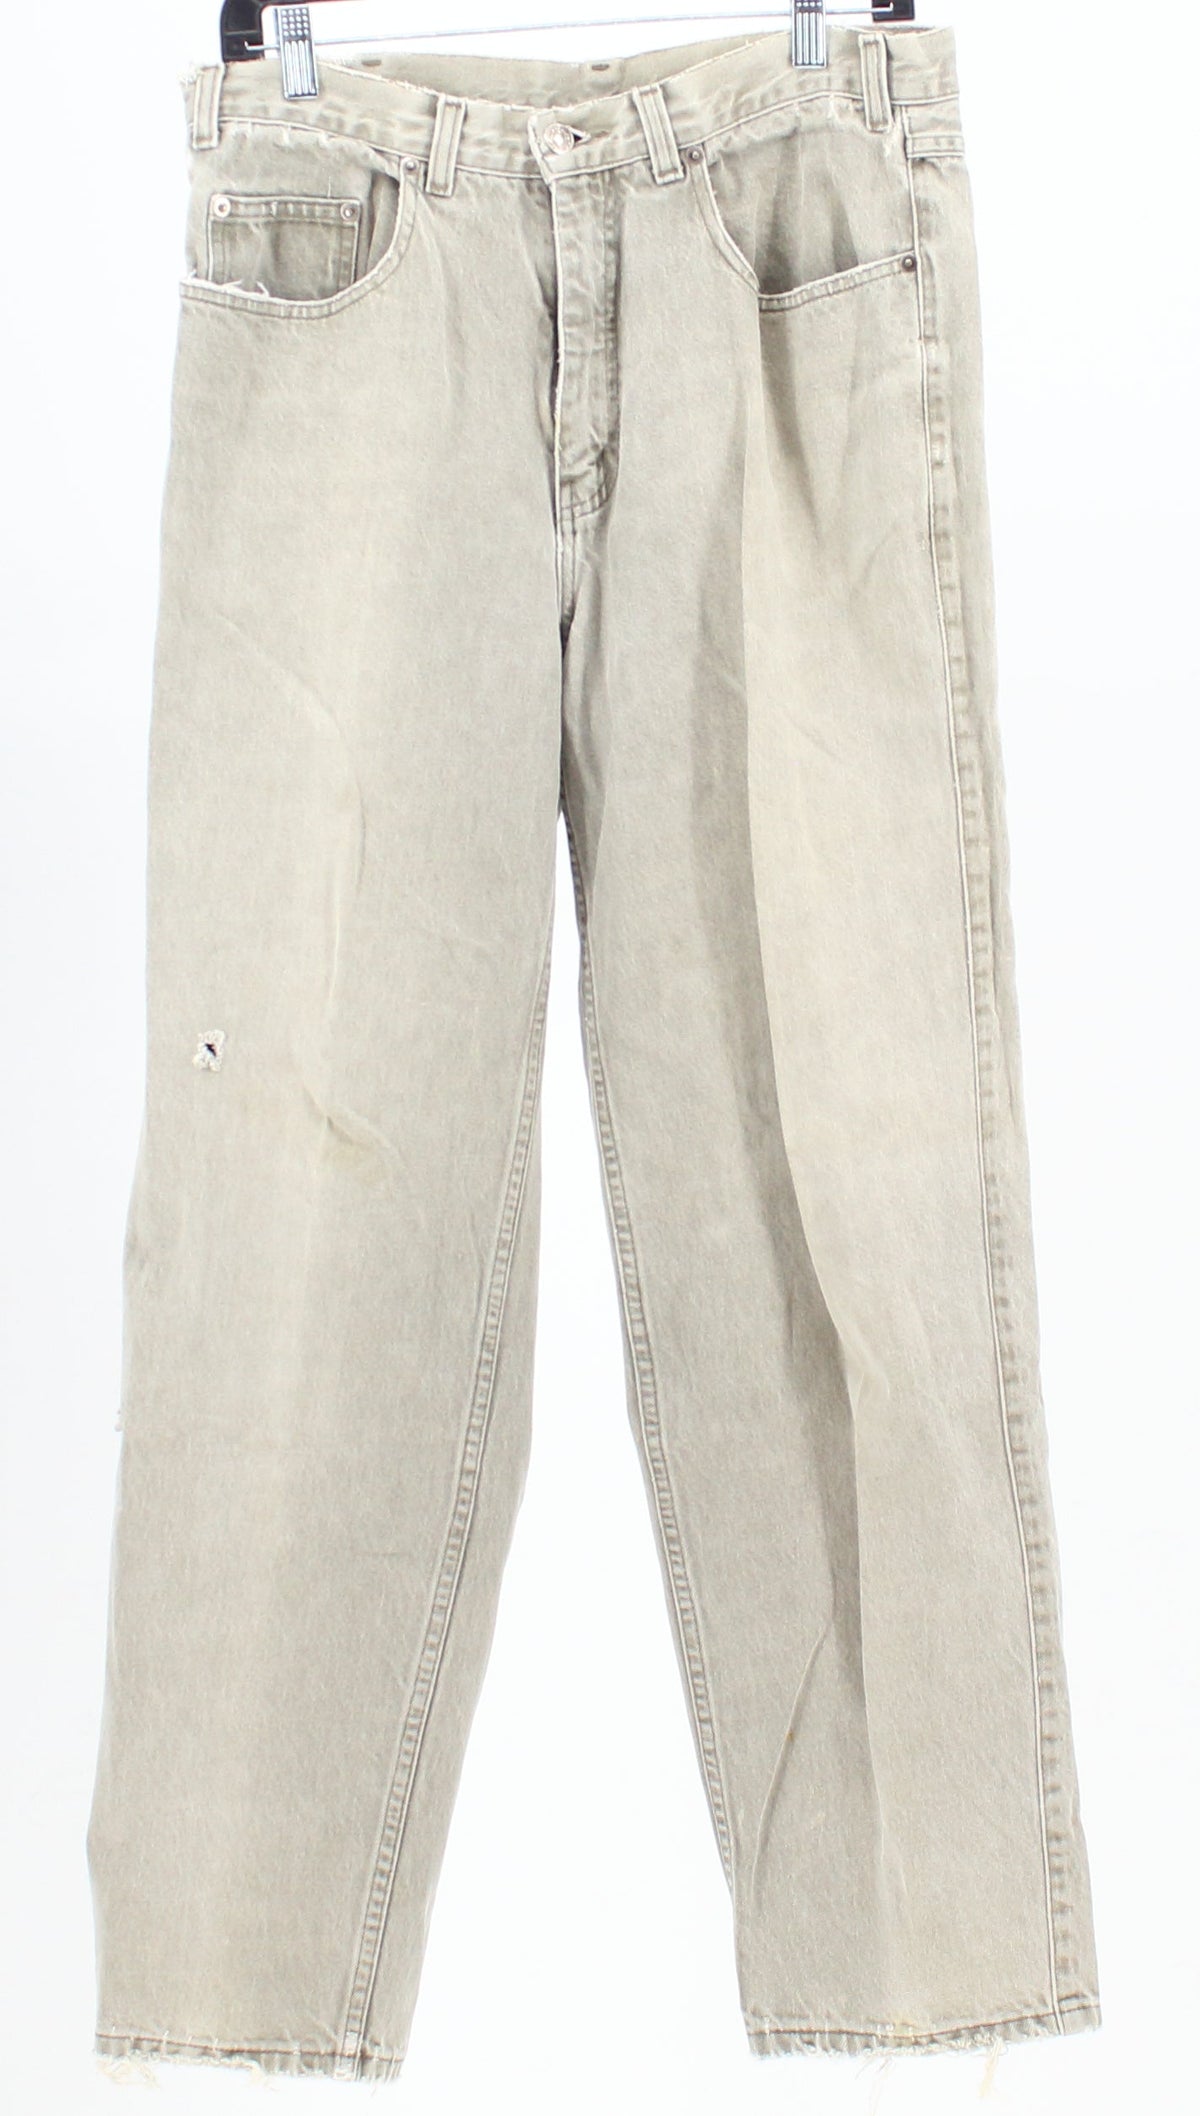 Chaps Ralph Lauren Light Grey Denim Jeans